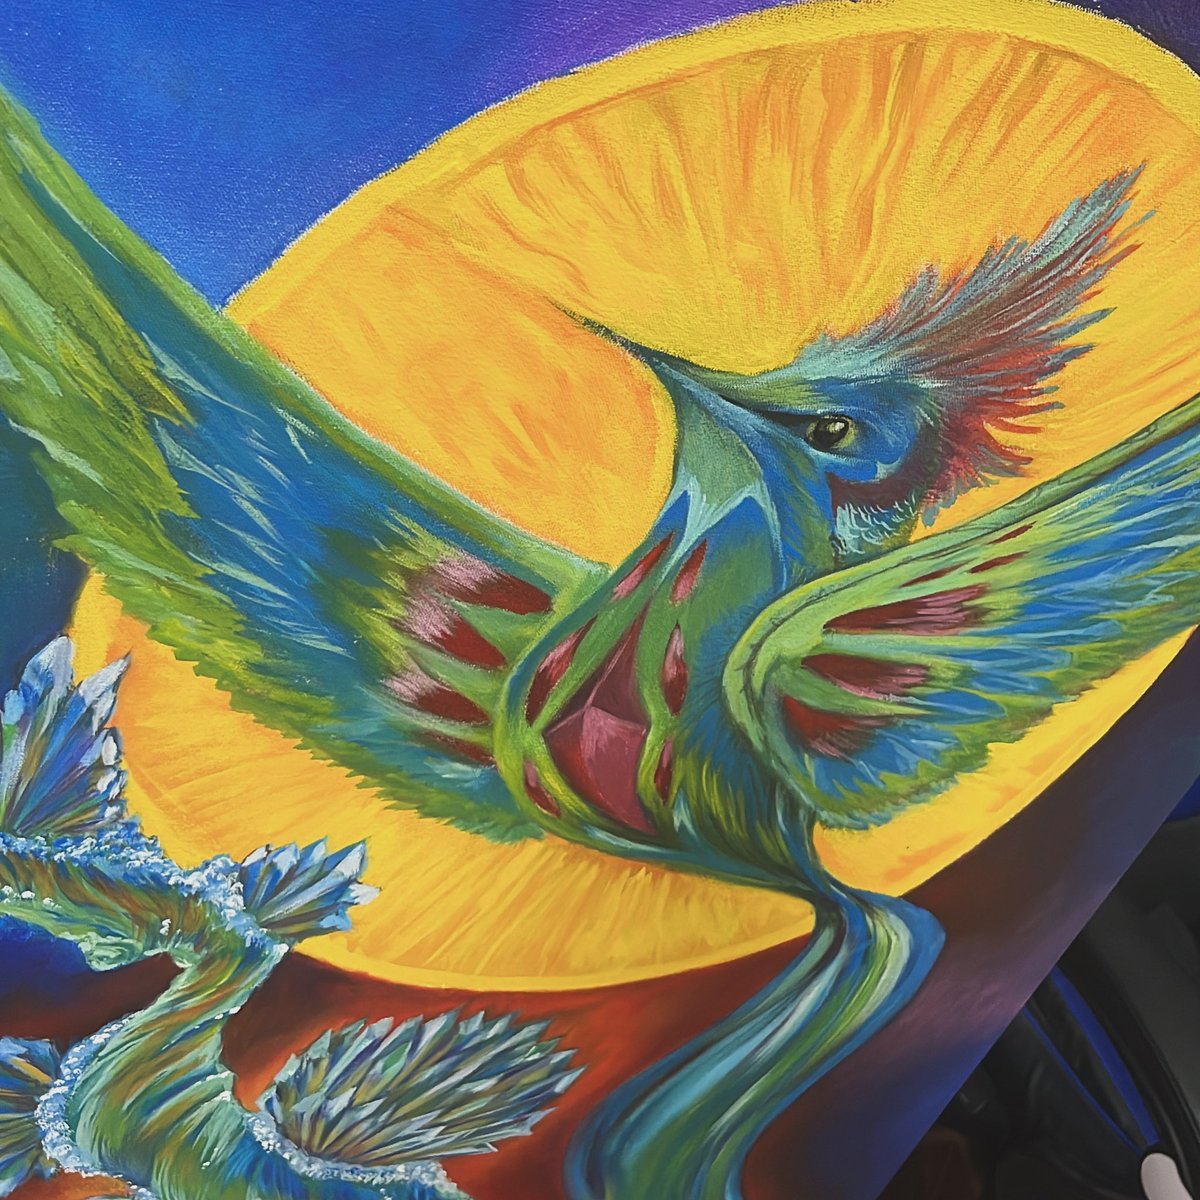 Prismatic Plumage of hummingbird #paint #art #draw #drawing #acrylic #sketch #sketchbook #boceto #ilustration #illustration #dibujo #pencil #pencilcolor #color #lineart